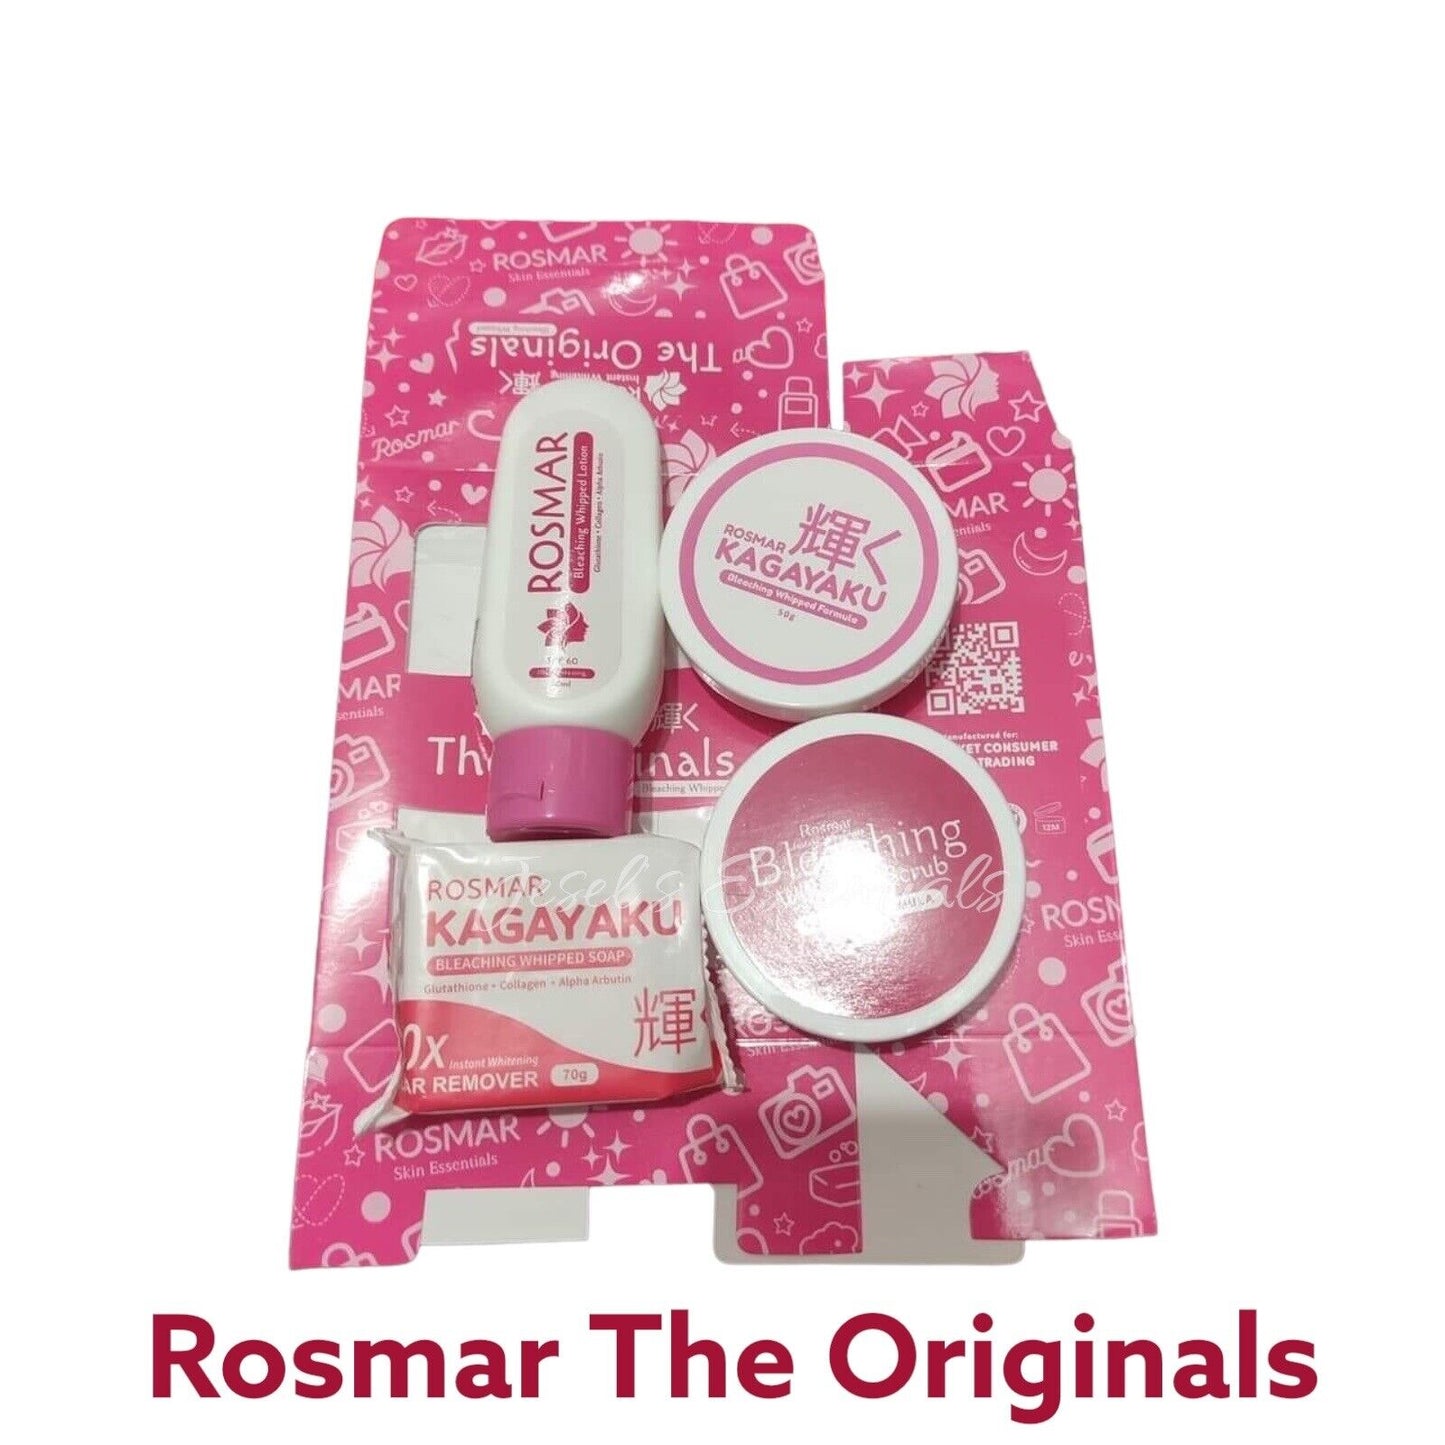 Rosmar The Originals